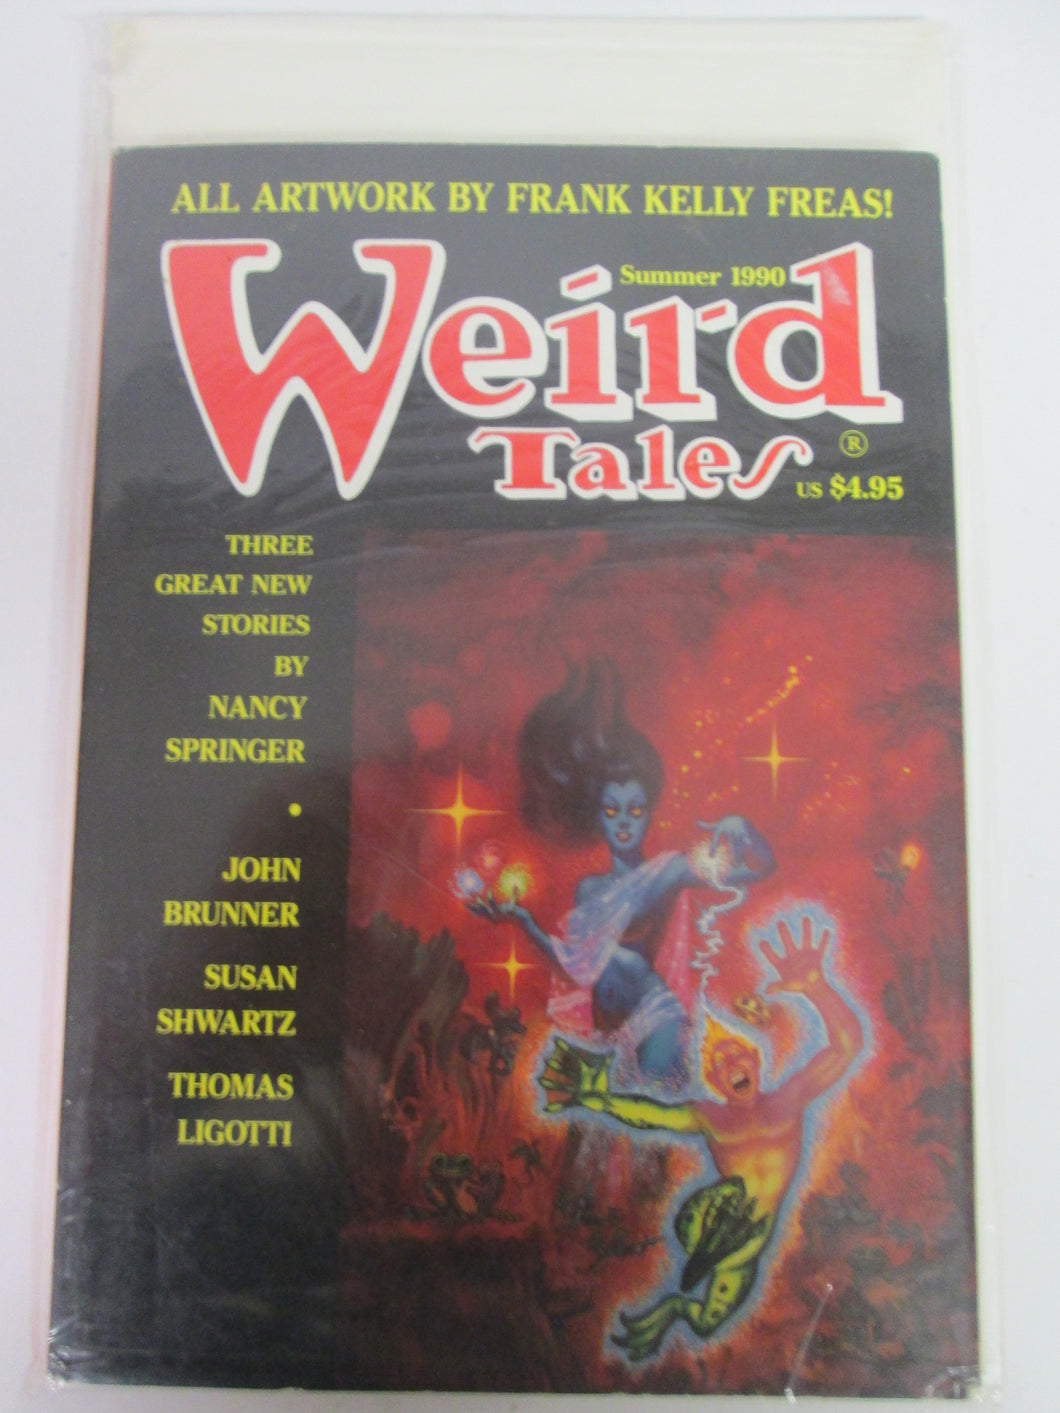 WEIRD TALES Magazine Summer 1990 special Frank Kelly Freas artwork issue Vol 51 #4